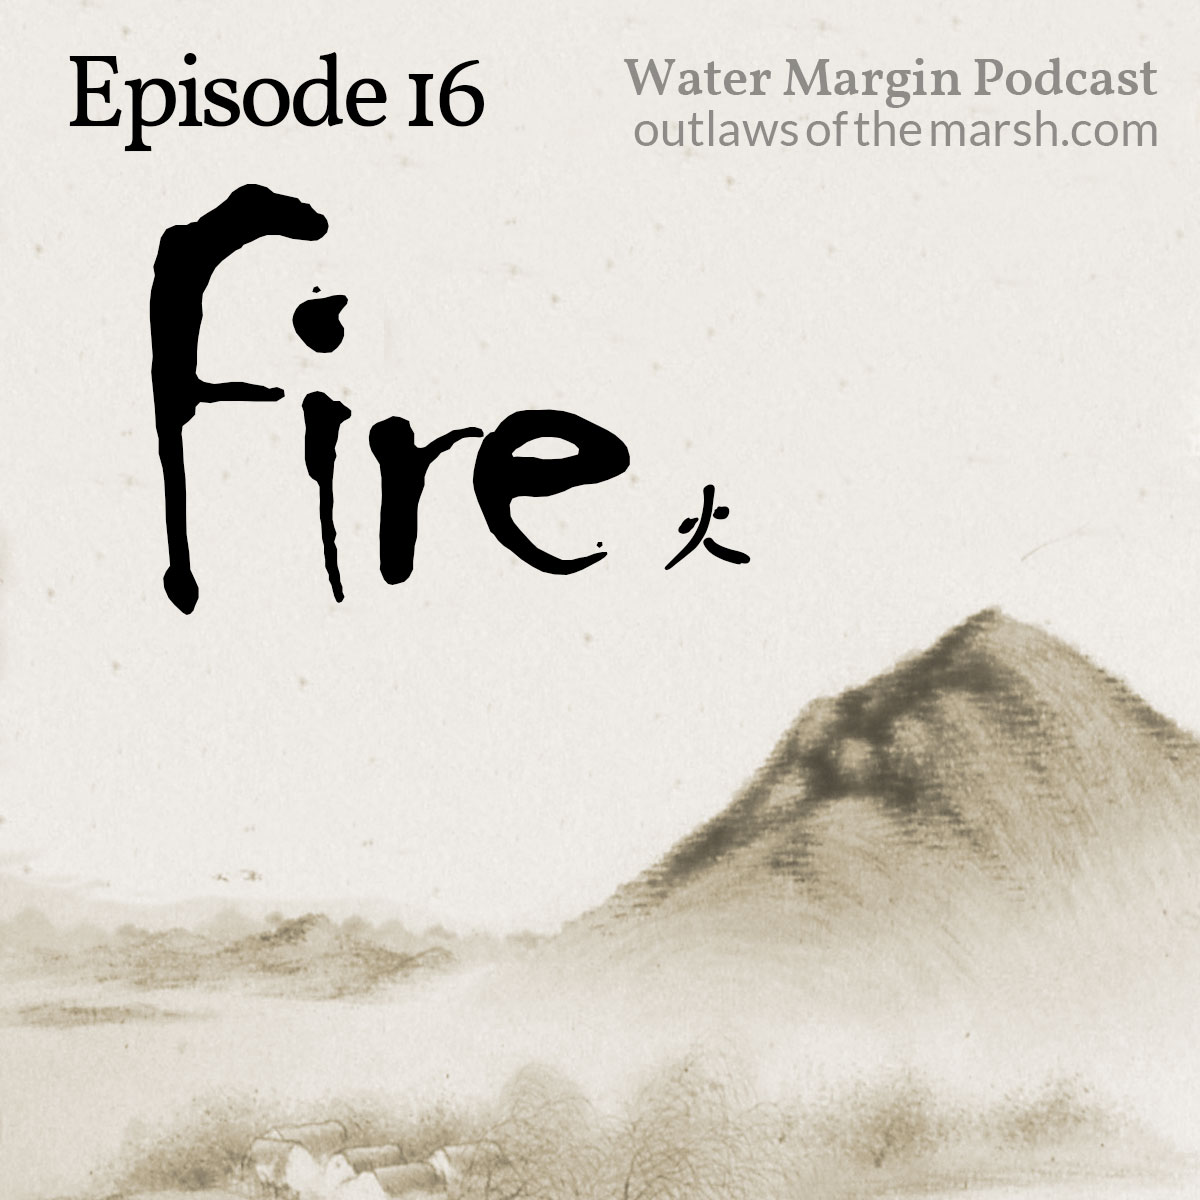 Water Margin Podcast: Episode 016